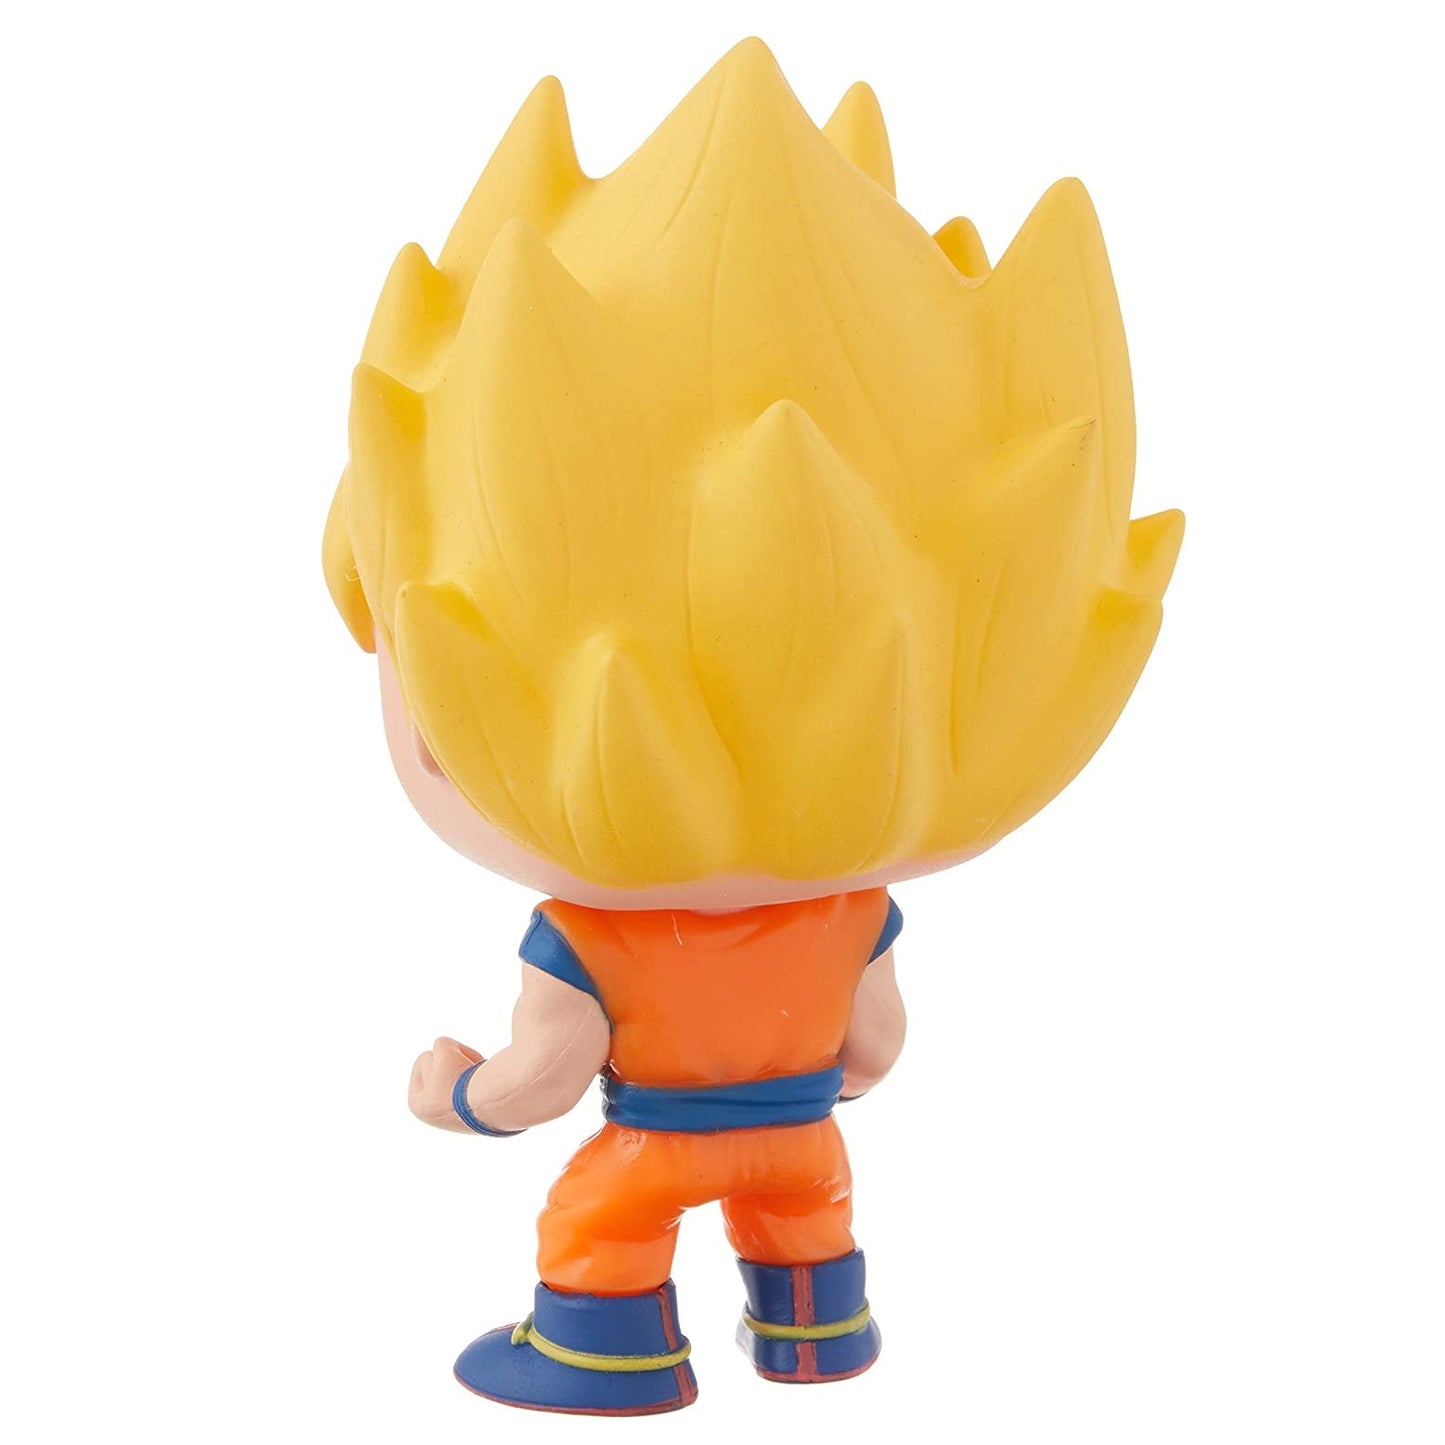 Super Saiyan Goku from Dragon Ball Z glow in the dark vinyl figure